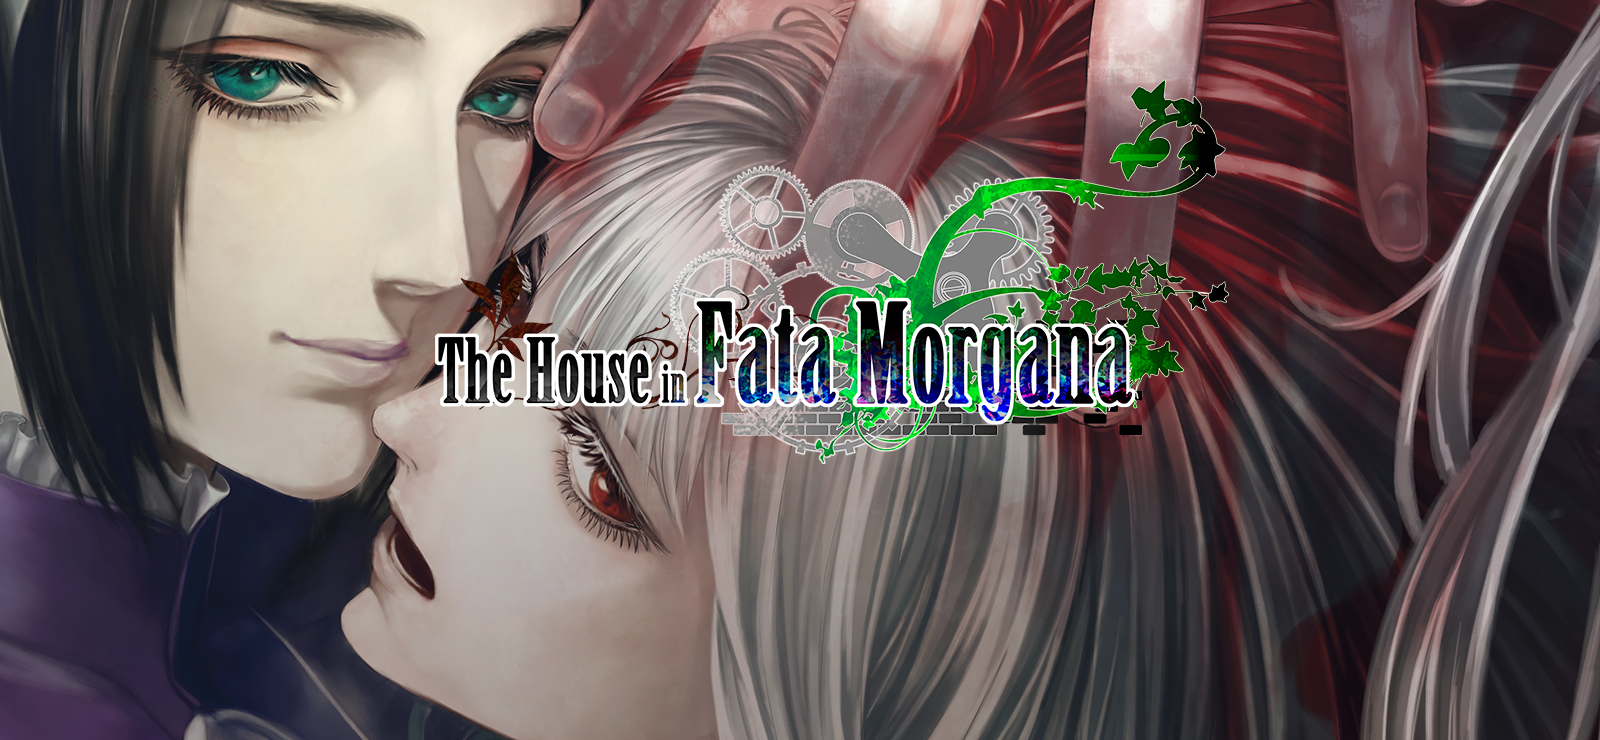 The House In Fata Morgana